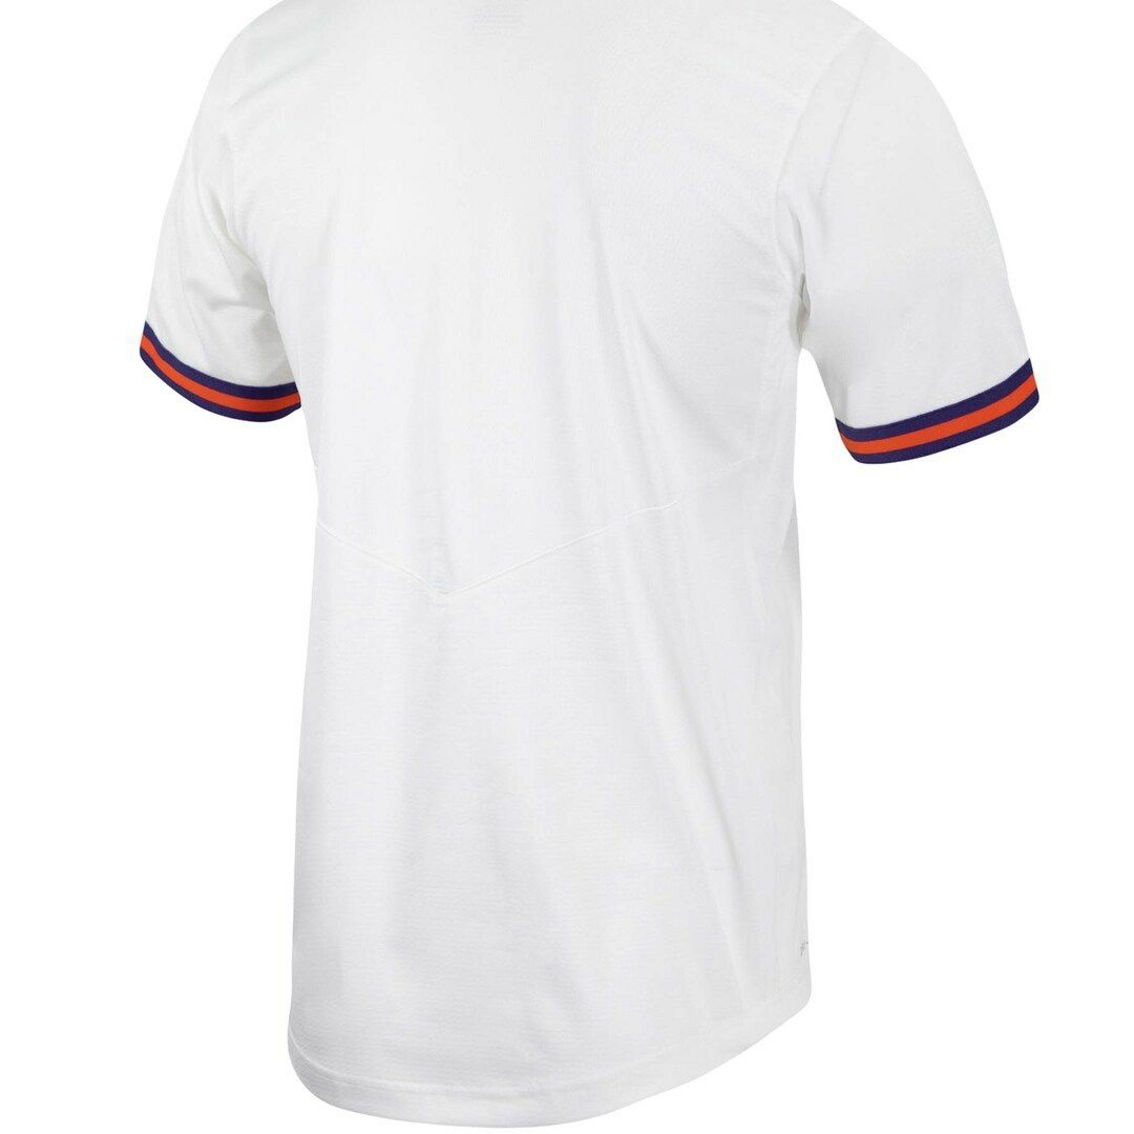 Nike Men's White Clemson Tigers Replica Full-Button Baseball Jersey - Image 4 of 4